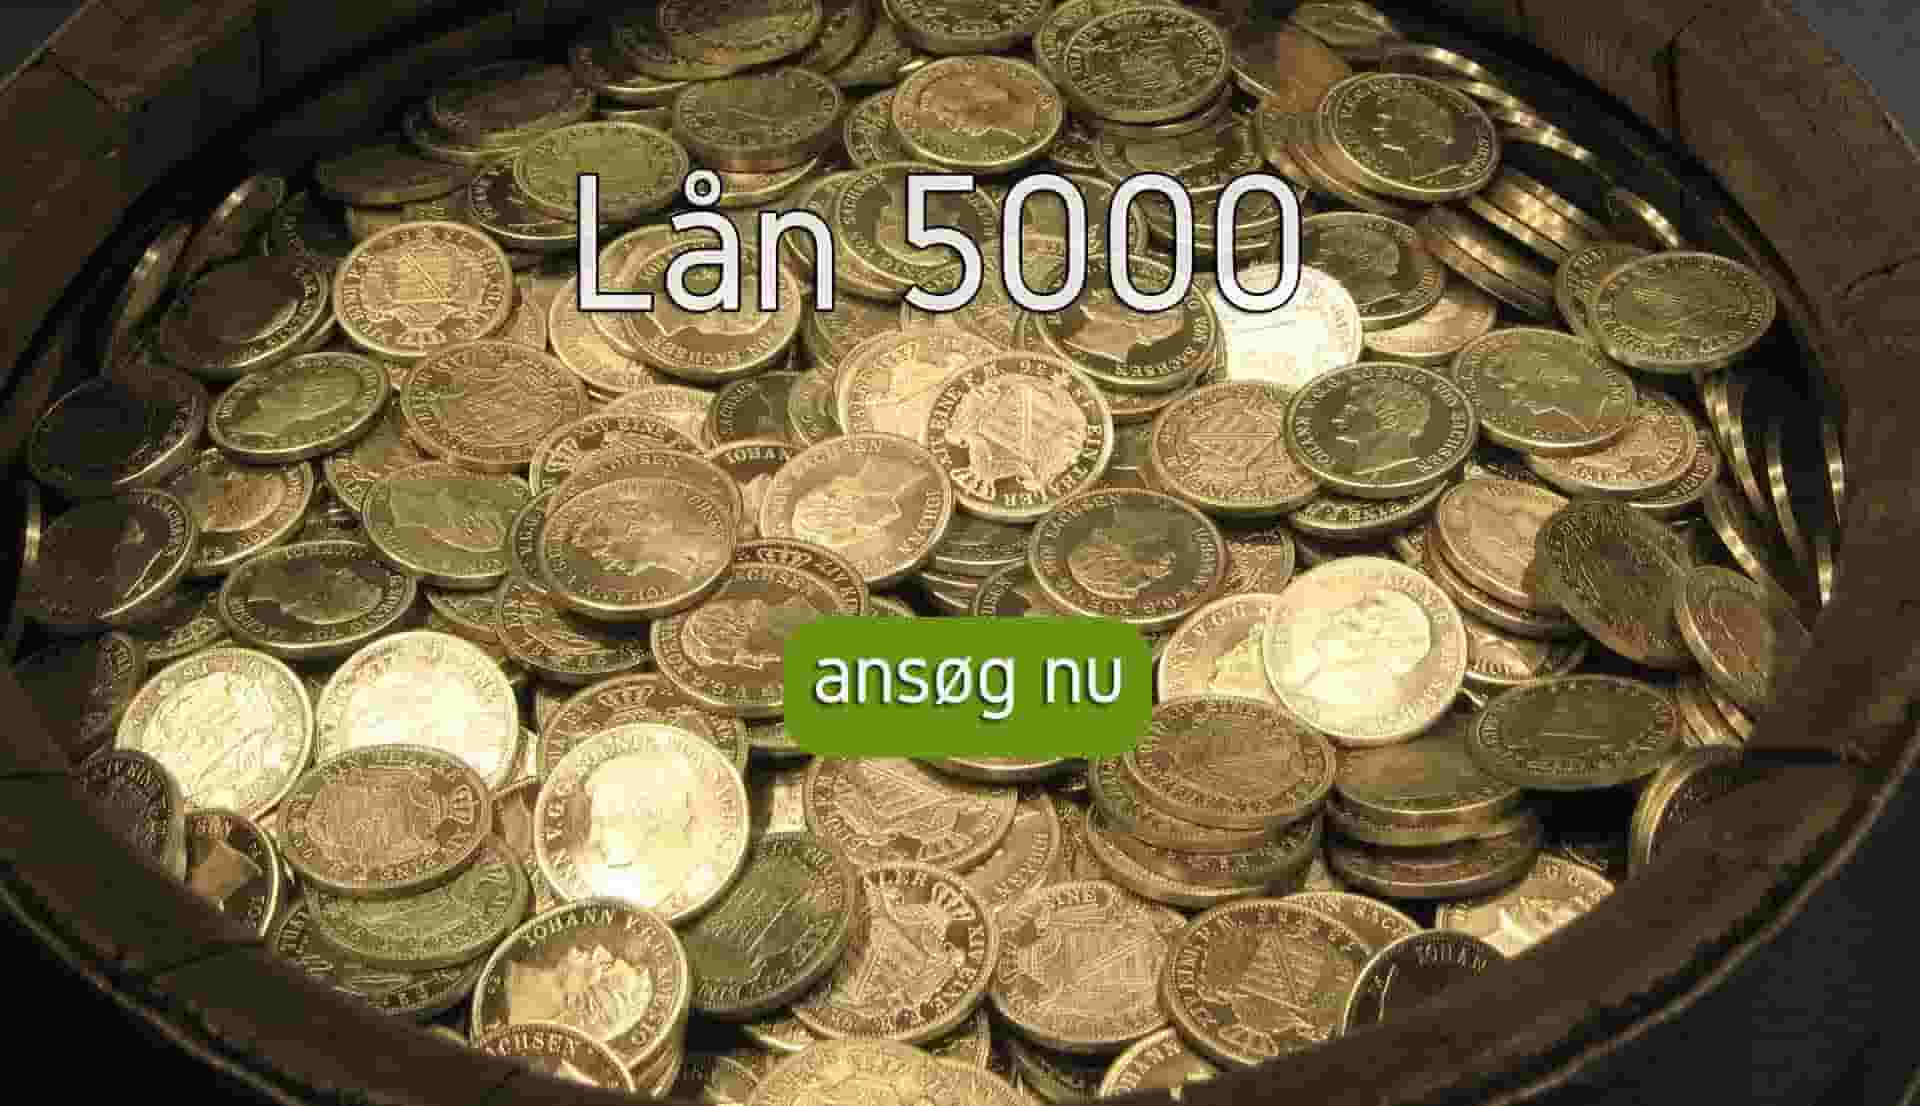 Lån 5000